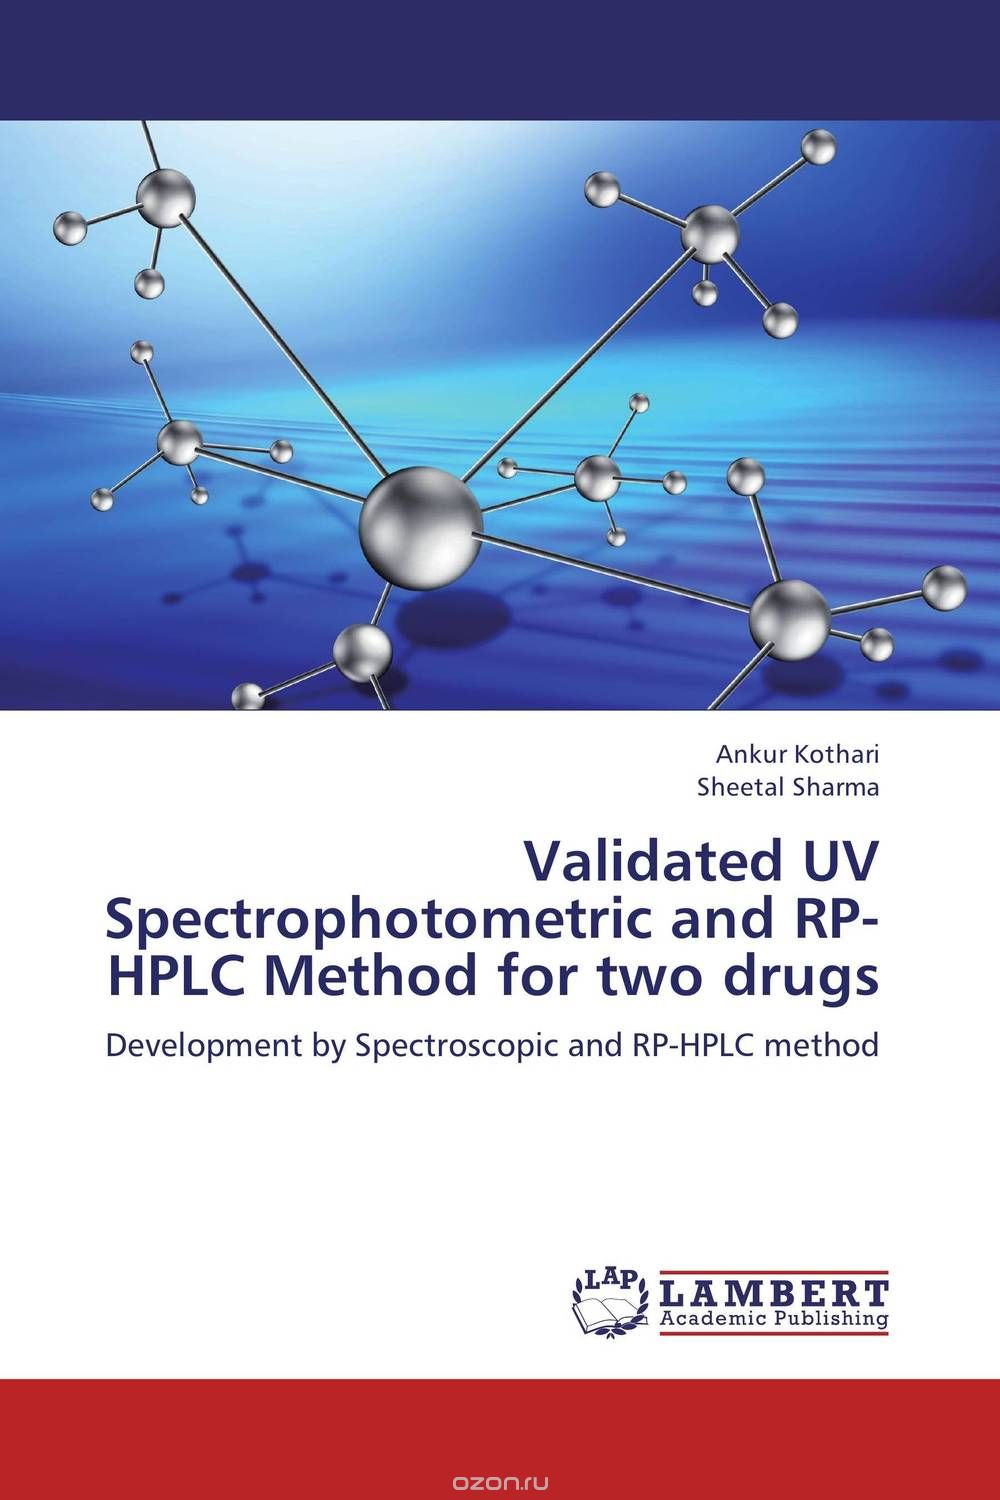 Скачать книгу "Validated UV Spectrophotometric and RP-HPLC Method for two drugs"